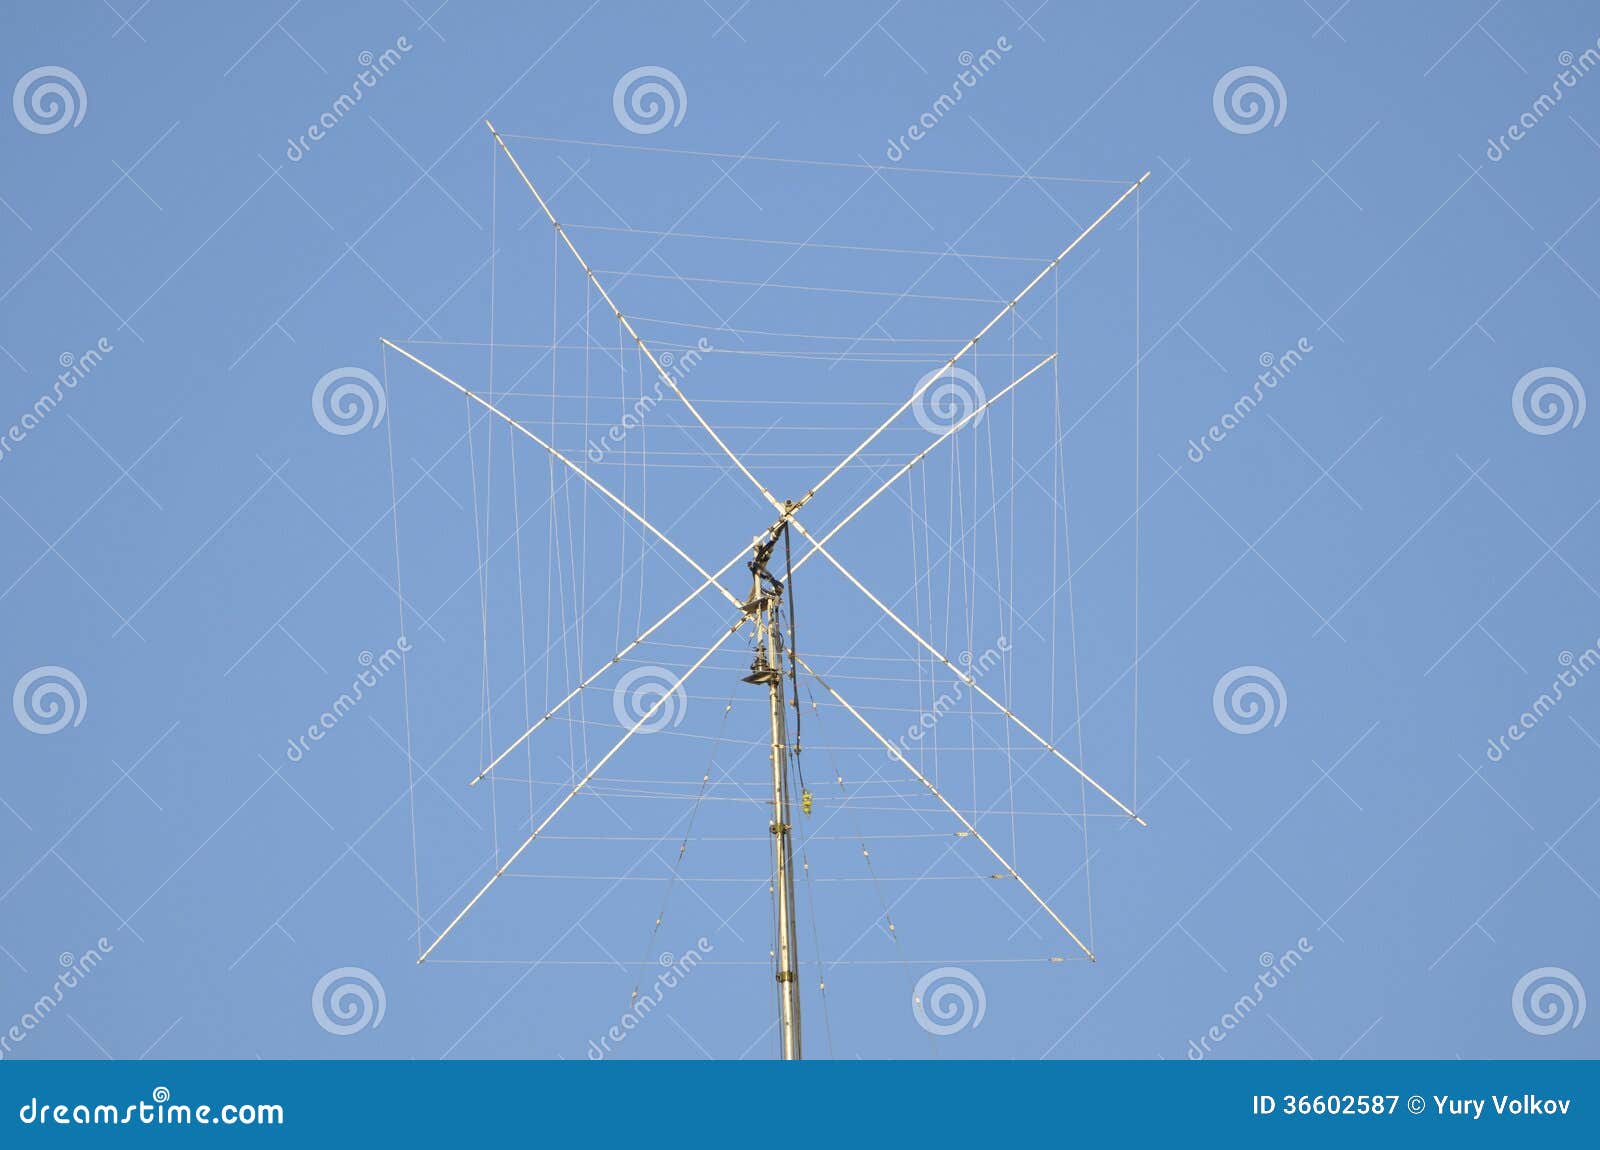 Amateur Radio Hf Antennas 40